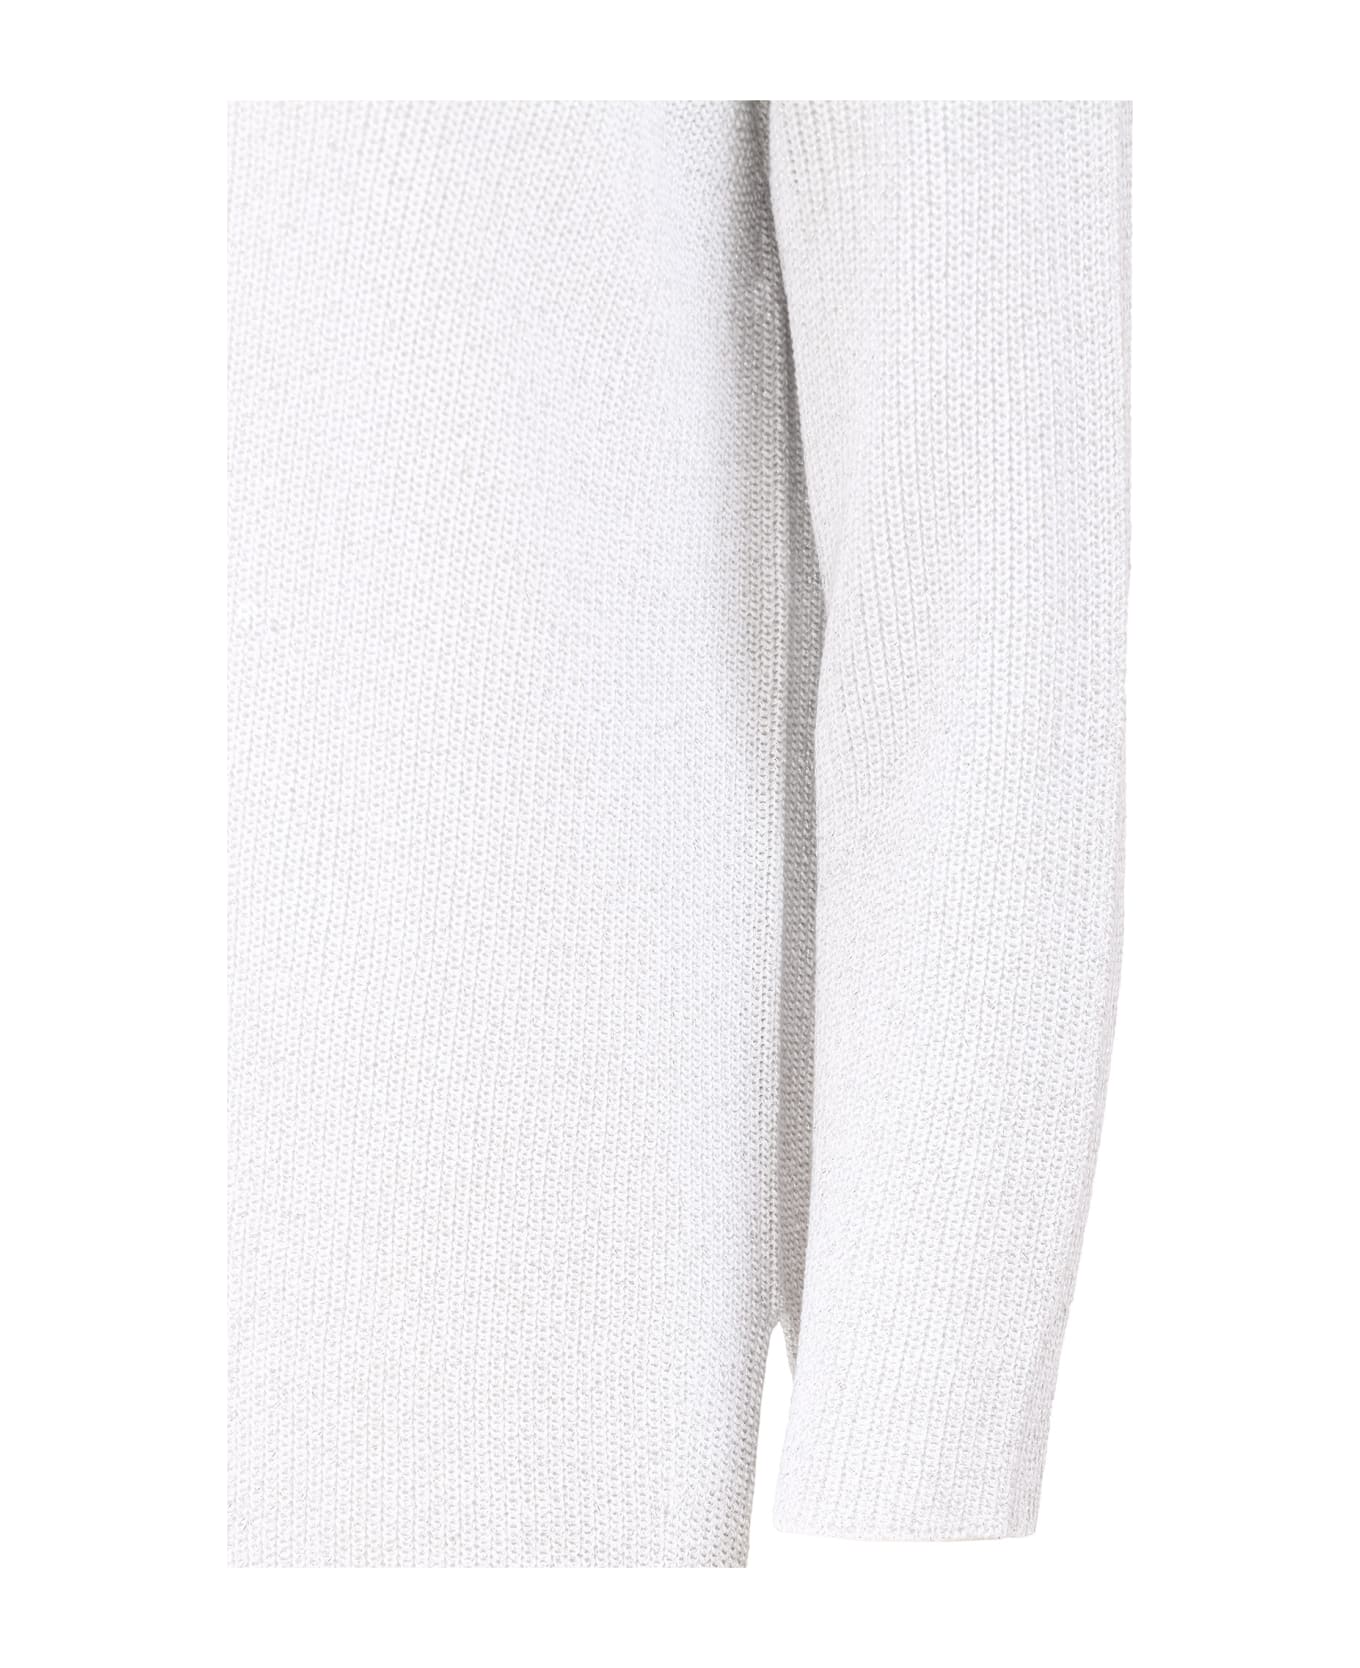 Fabiana Filippi Cotton Sweater - Bianco ottico